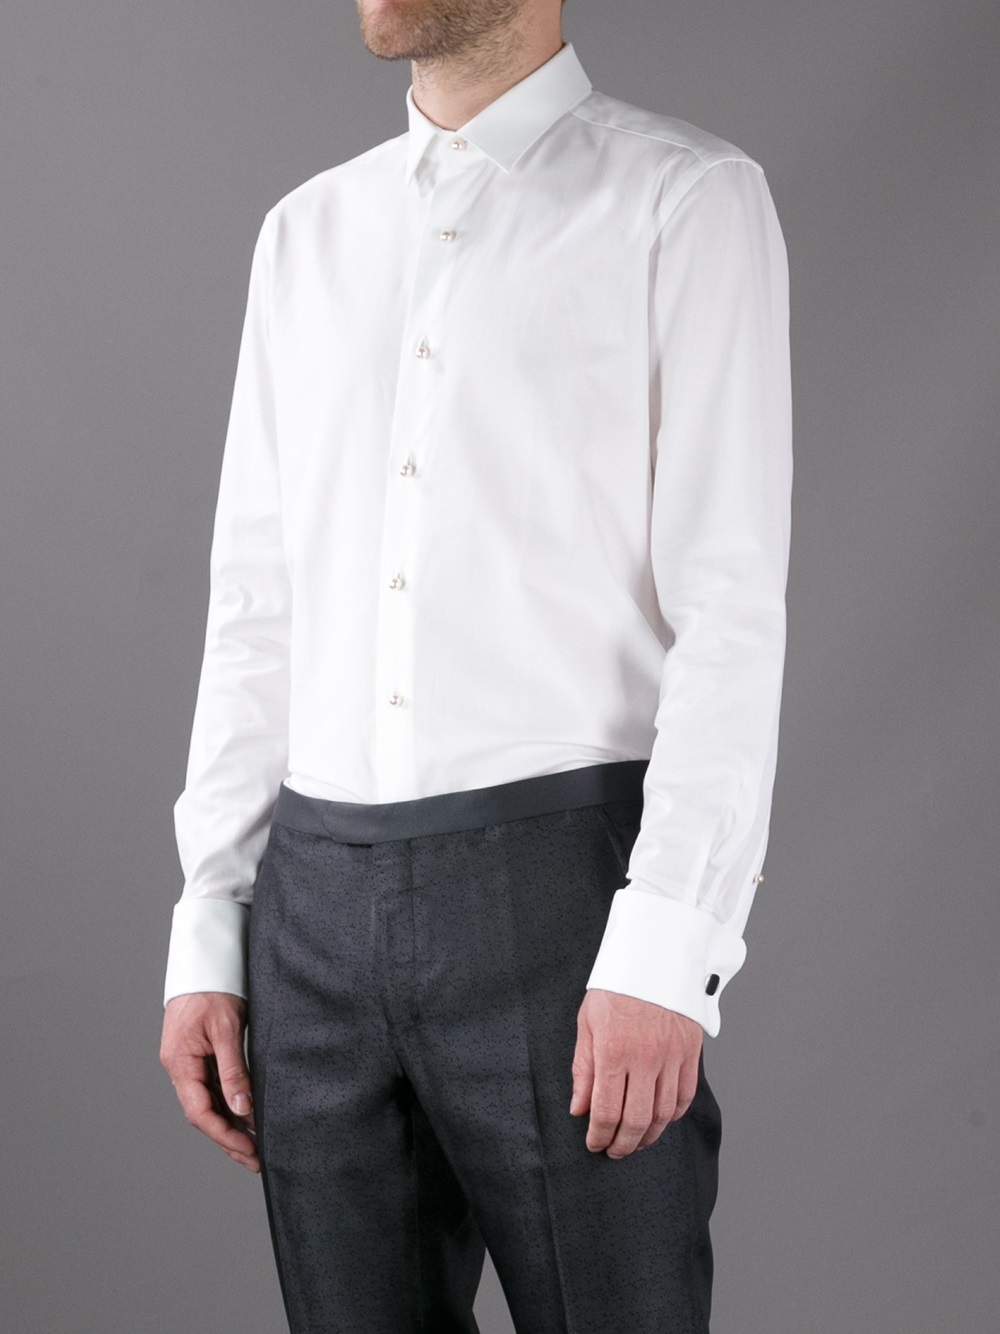 dragonaur 2Pcs Faux Pearl Fashion Cufflinks Shirt Sleeve Buttons Clothes Accessory Gift for Men Women Black 